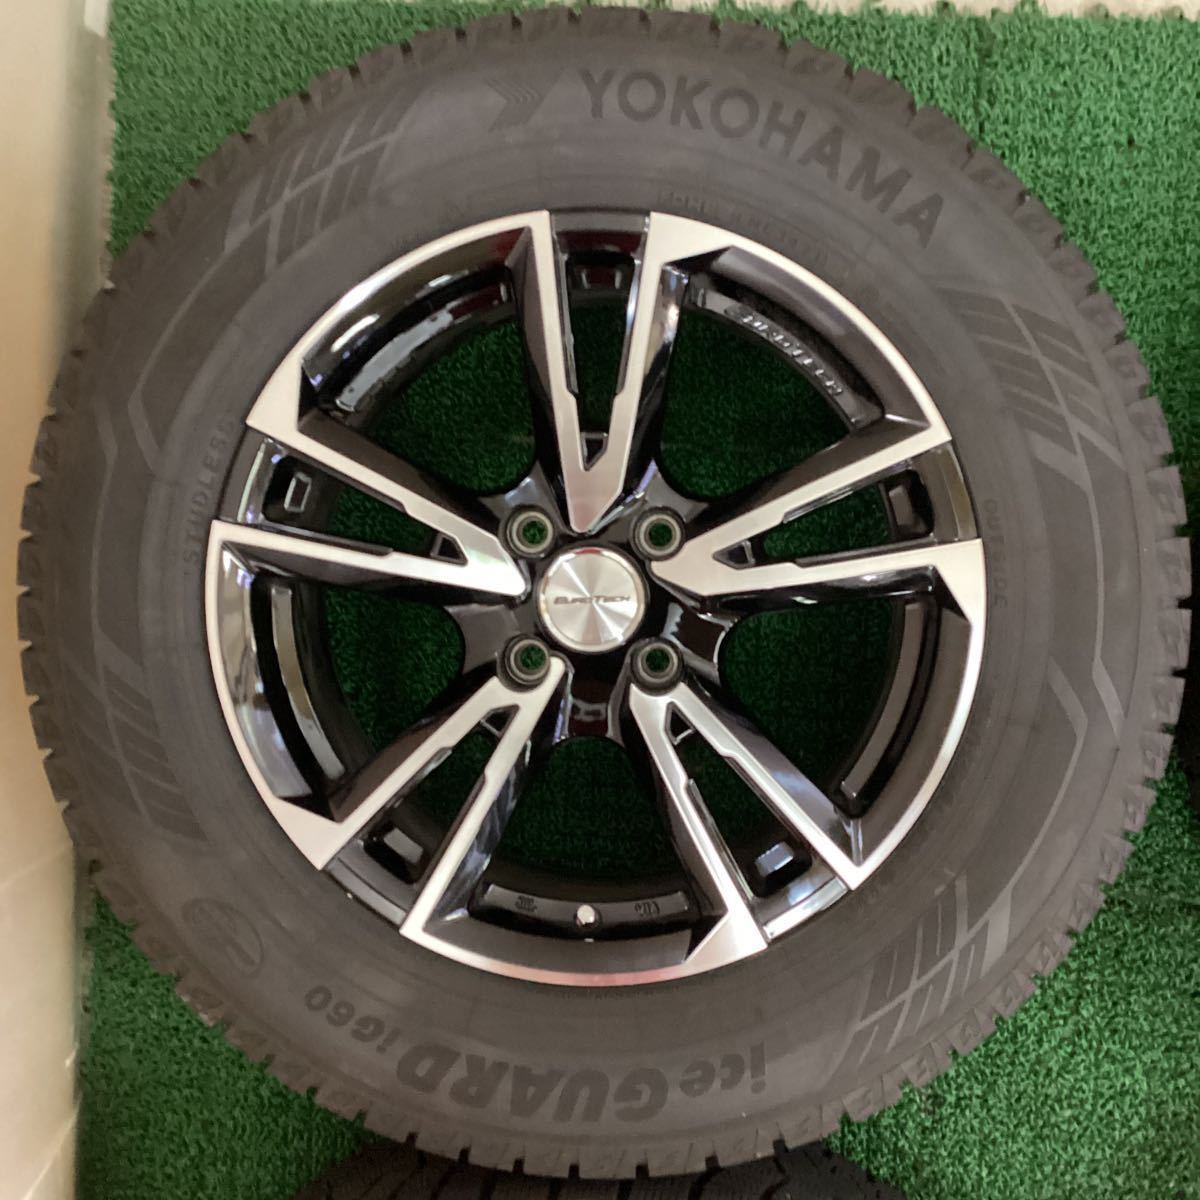  studless Peugeot non-genuine aluminum wheel set 16×6.5J+38 108-4H secondhand goods 4ps.@[489]